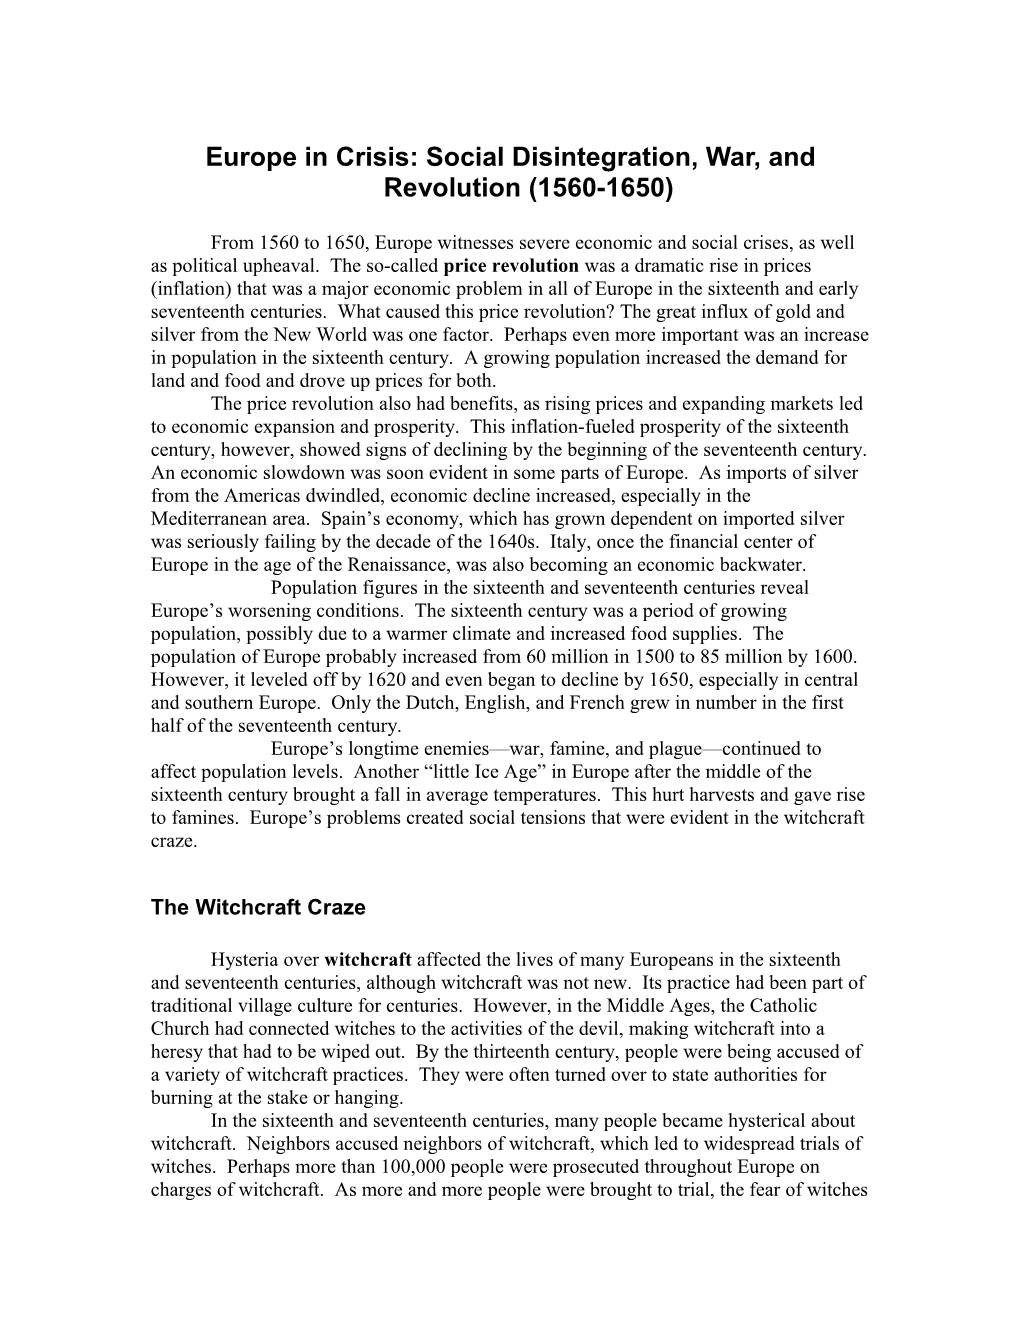 Europe in Crisis: Social Disintegration, War, and Revolution (1560-1650)